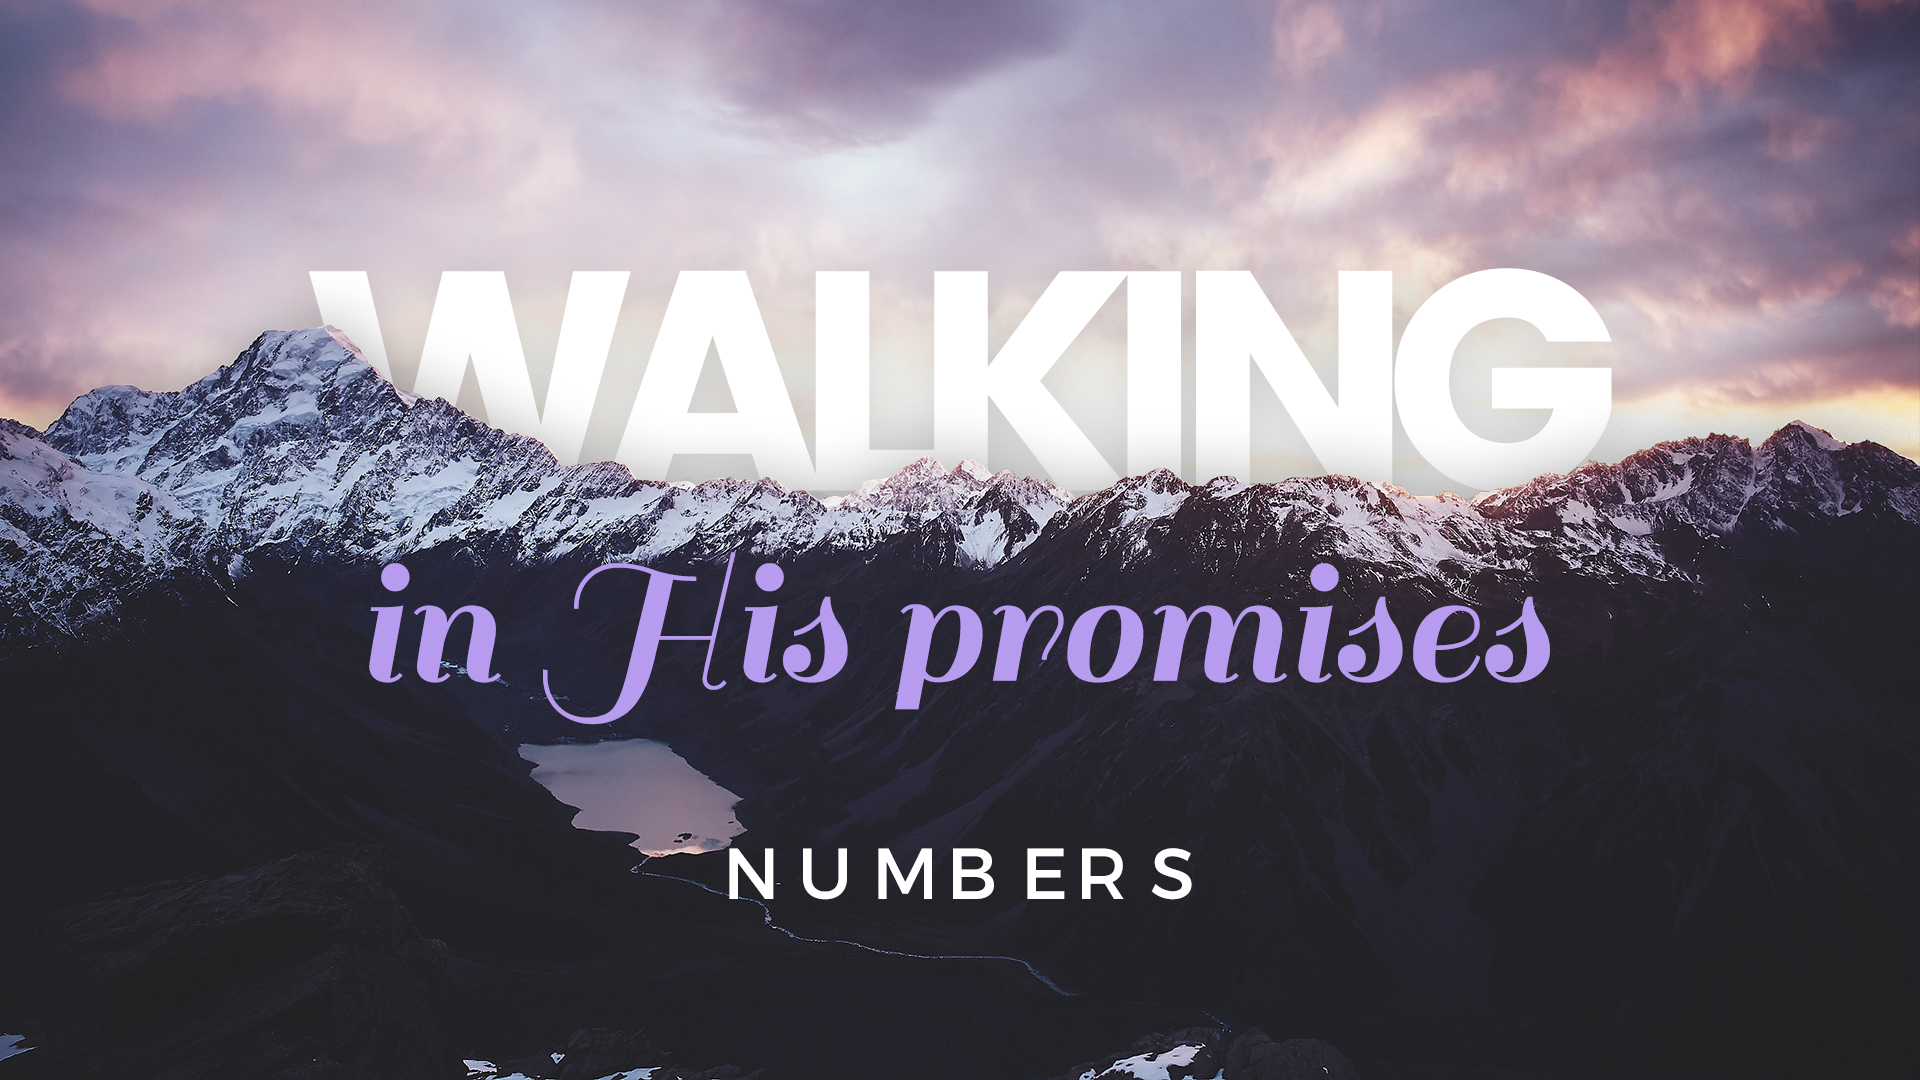 Walking in His promises: Numbers